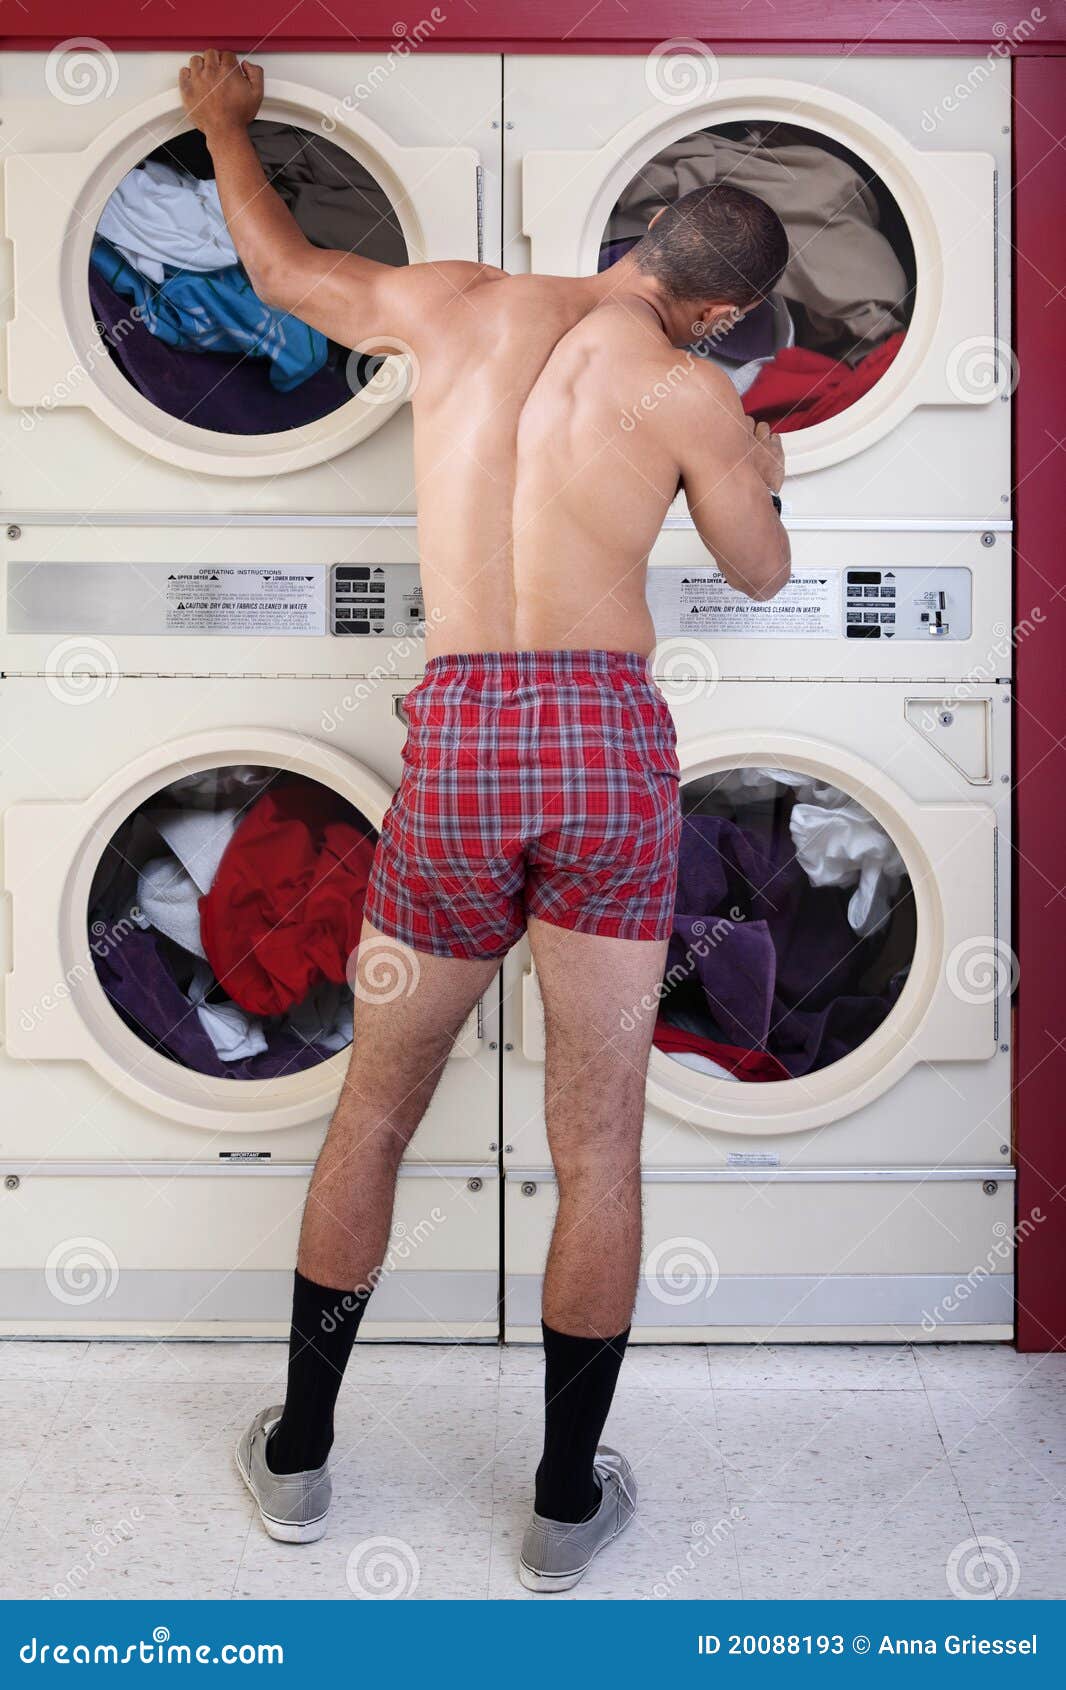 https://thumbs.dreamstime.com/z/man-underwear-dryer-20088193.jpg